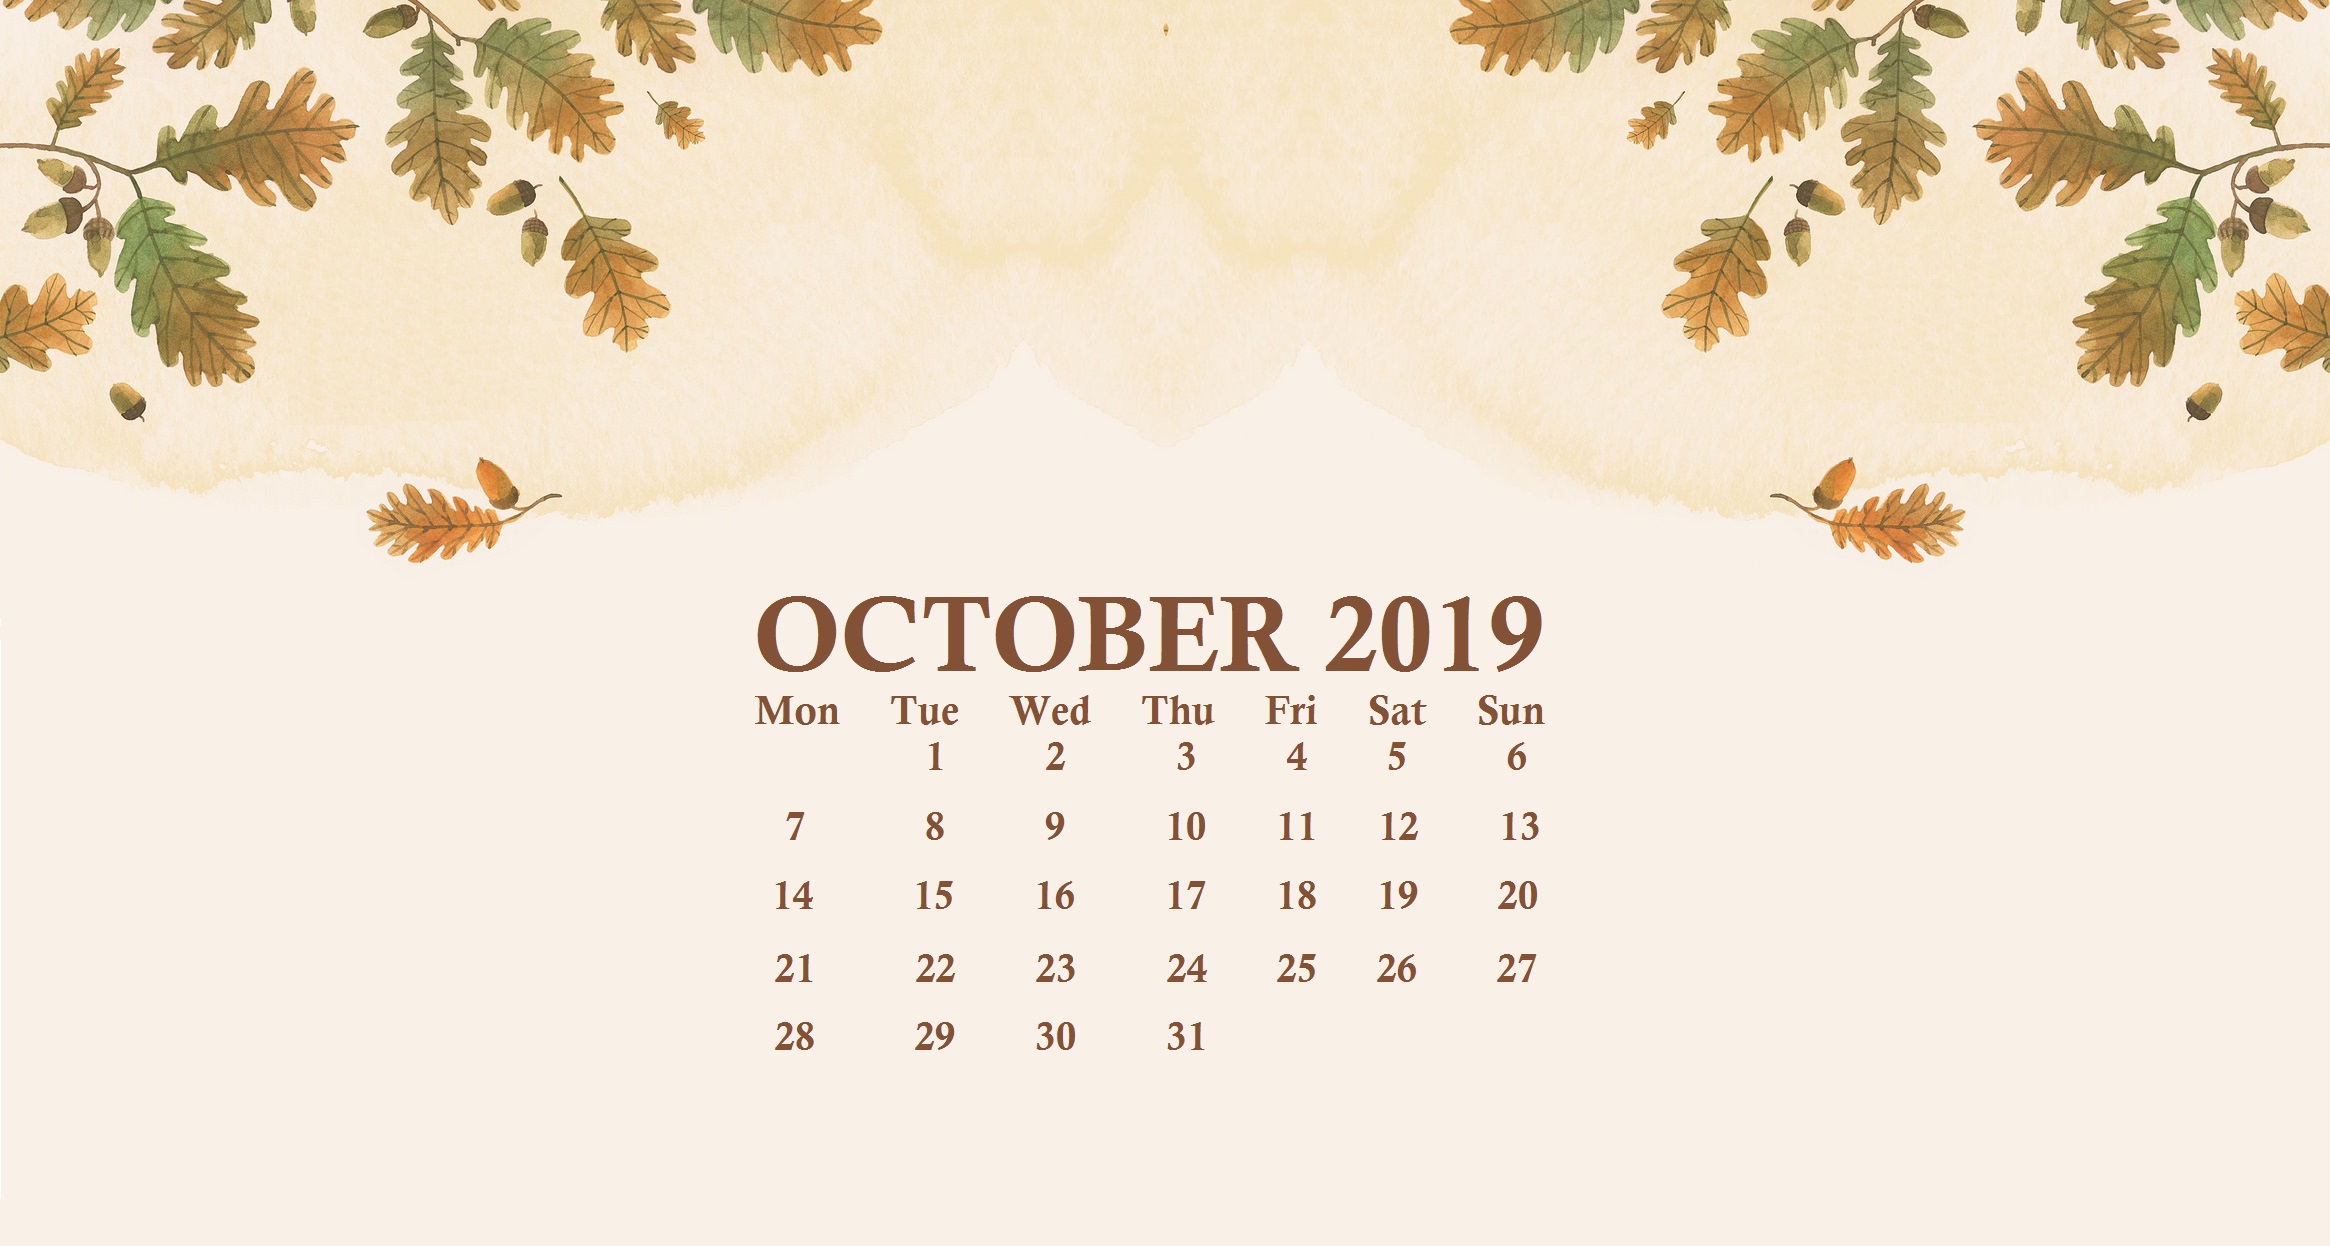 October 2019 Calendar Wallpapers